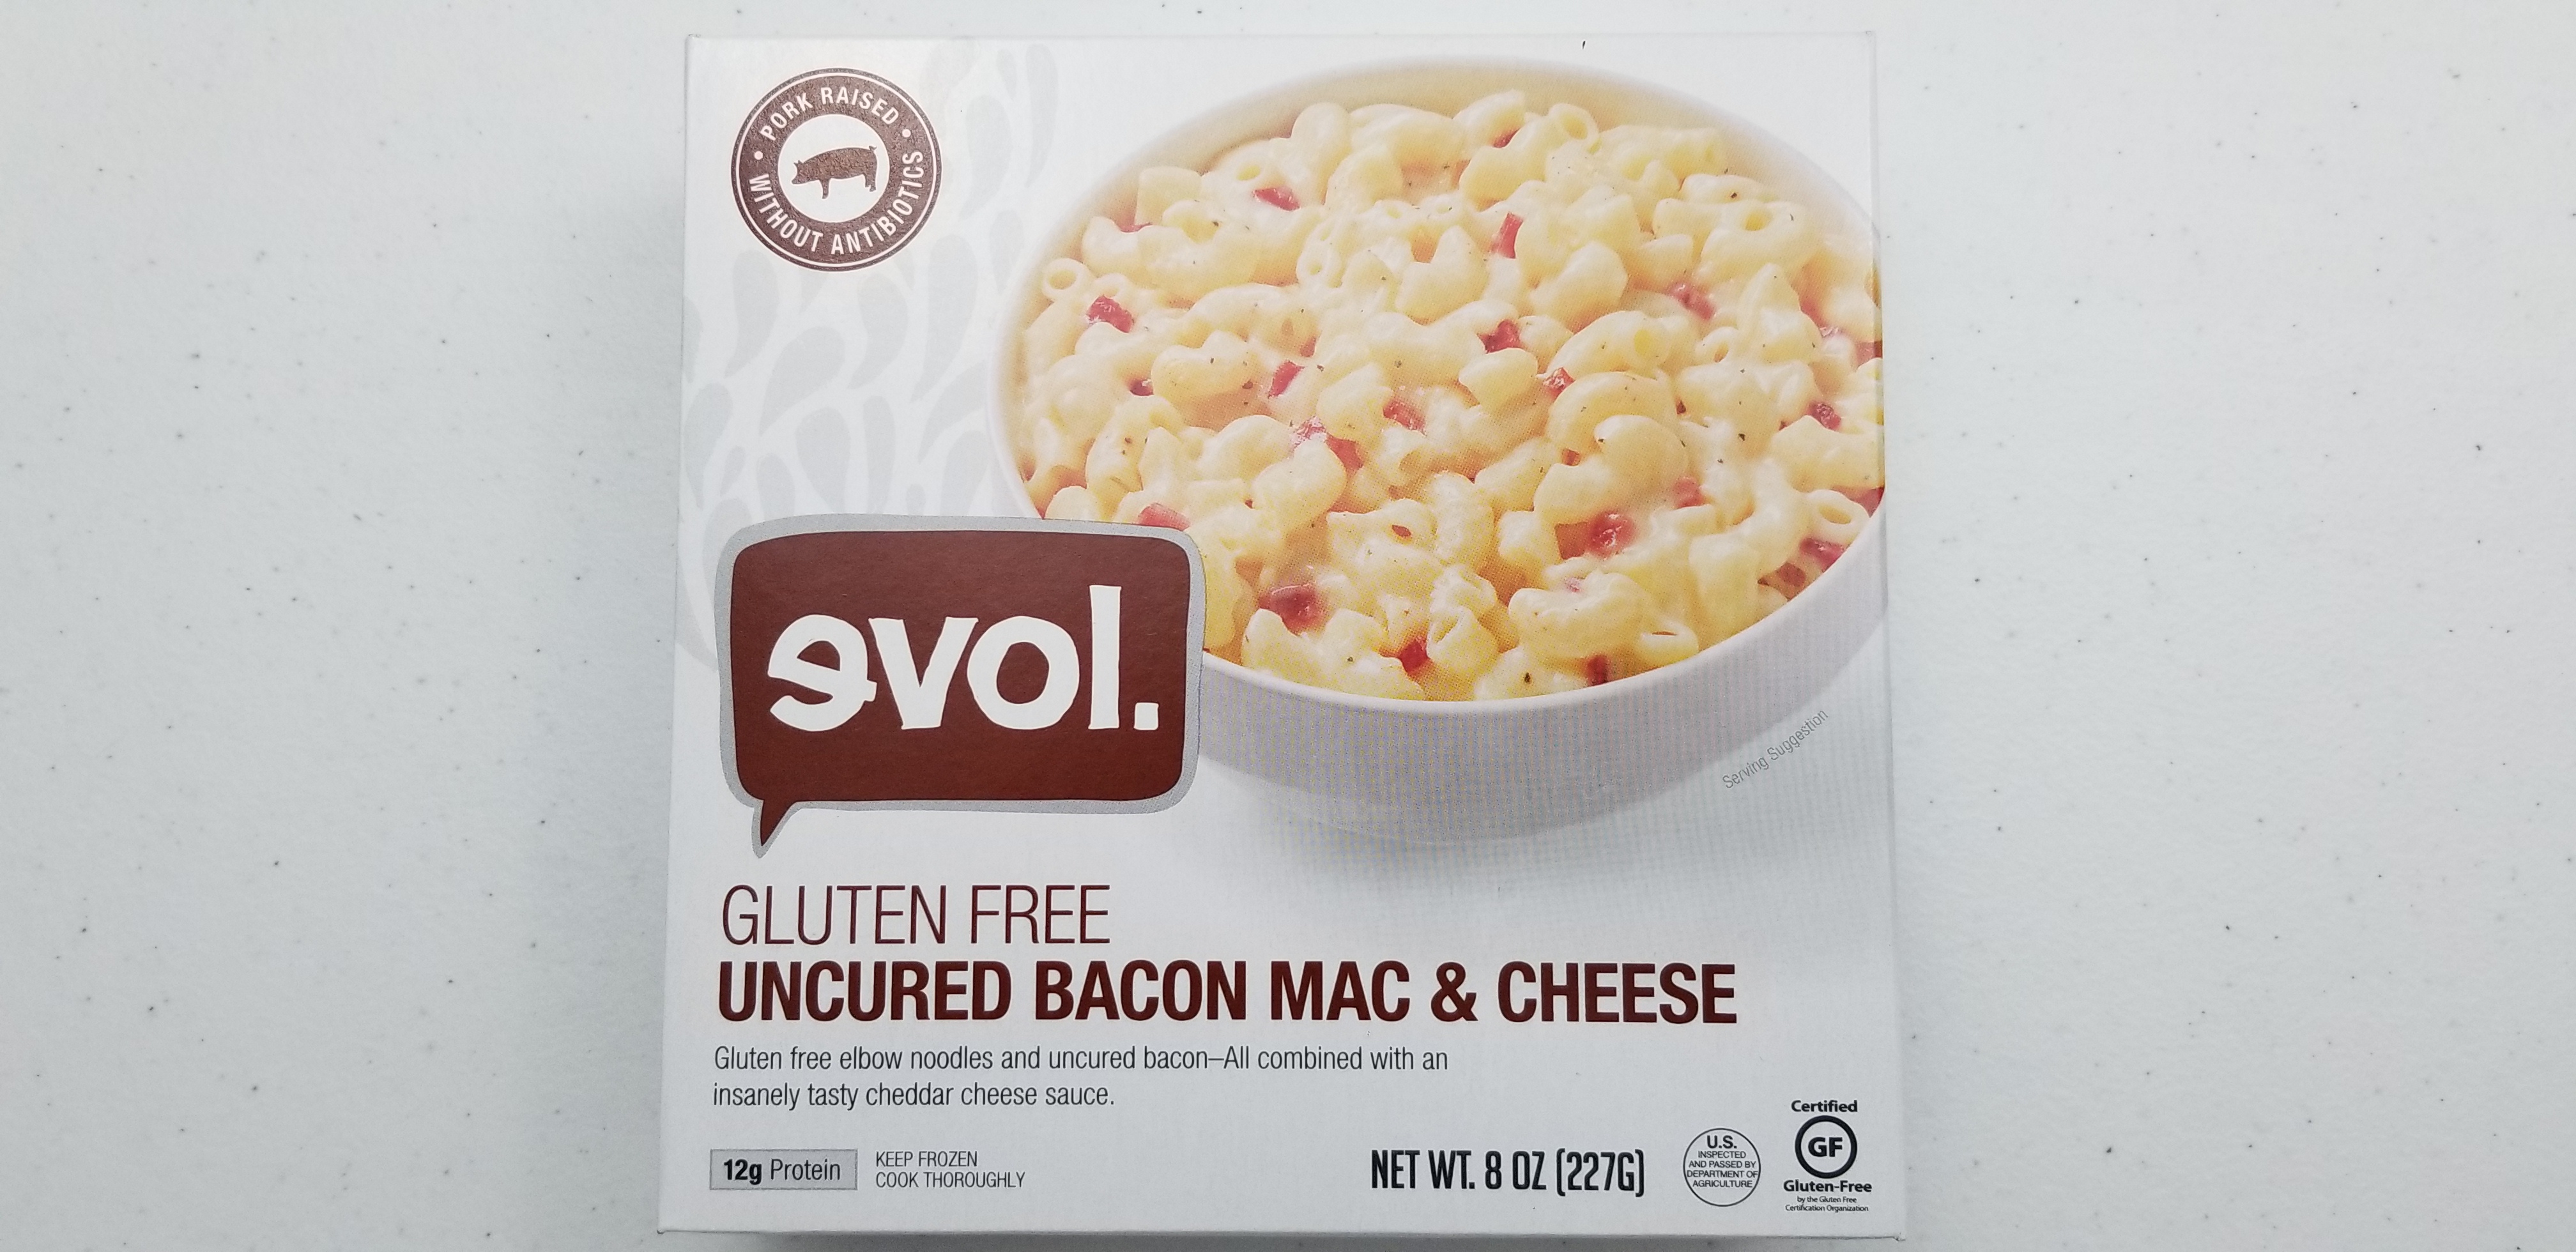 evol. gluten free uncured bacon mac & cheese